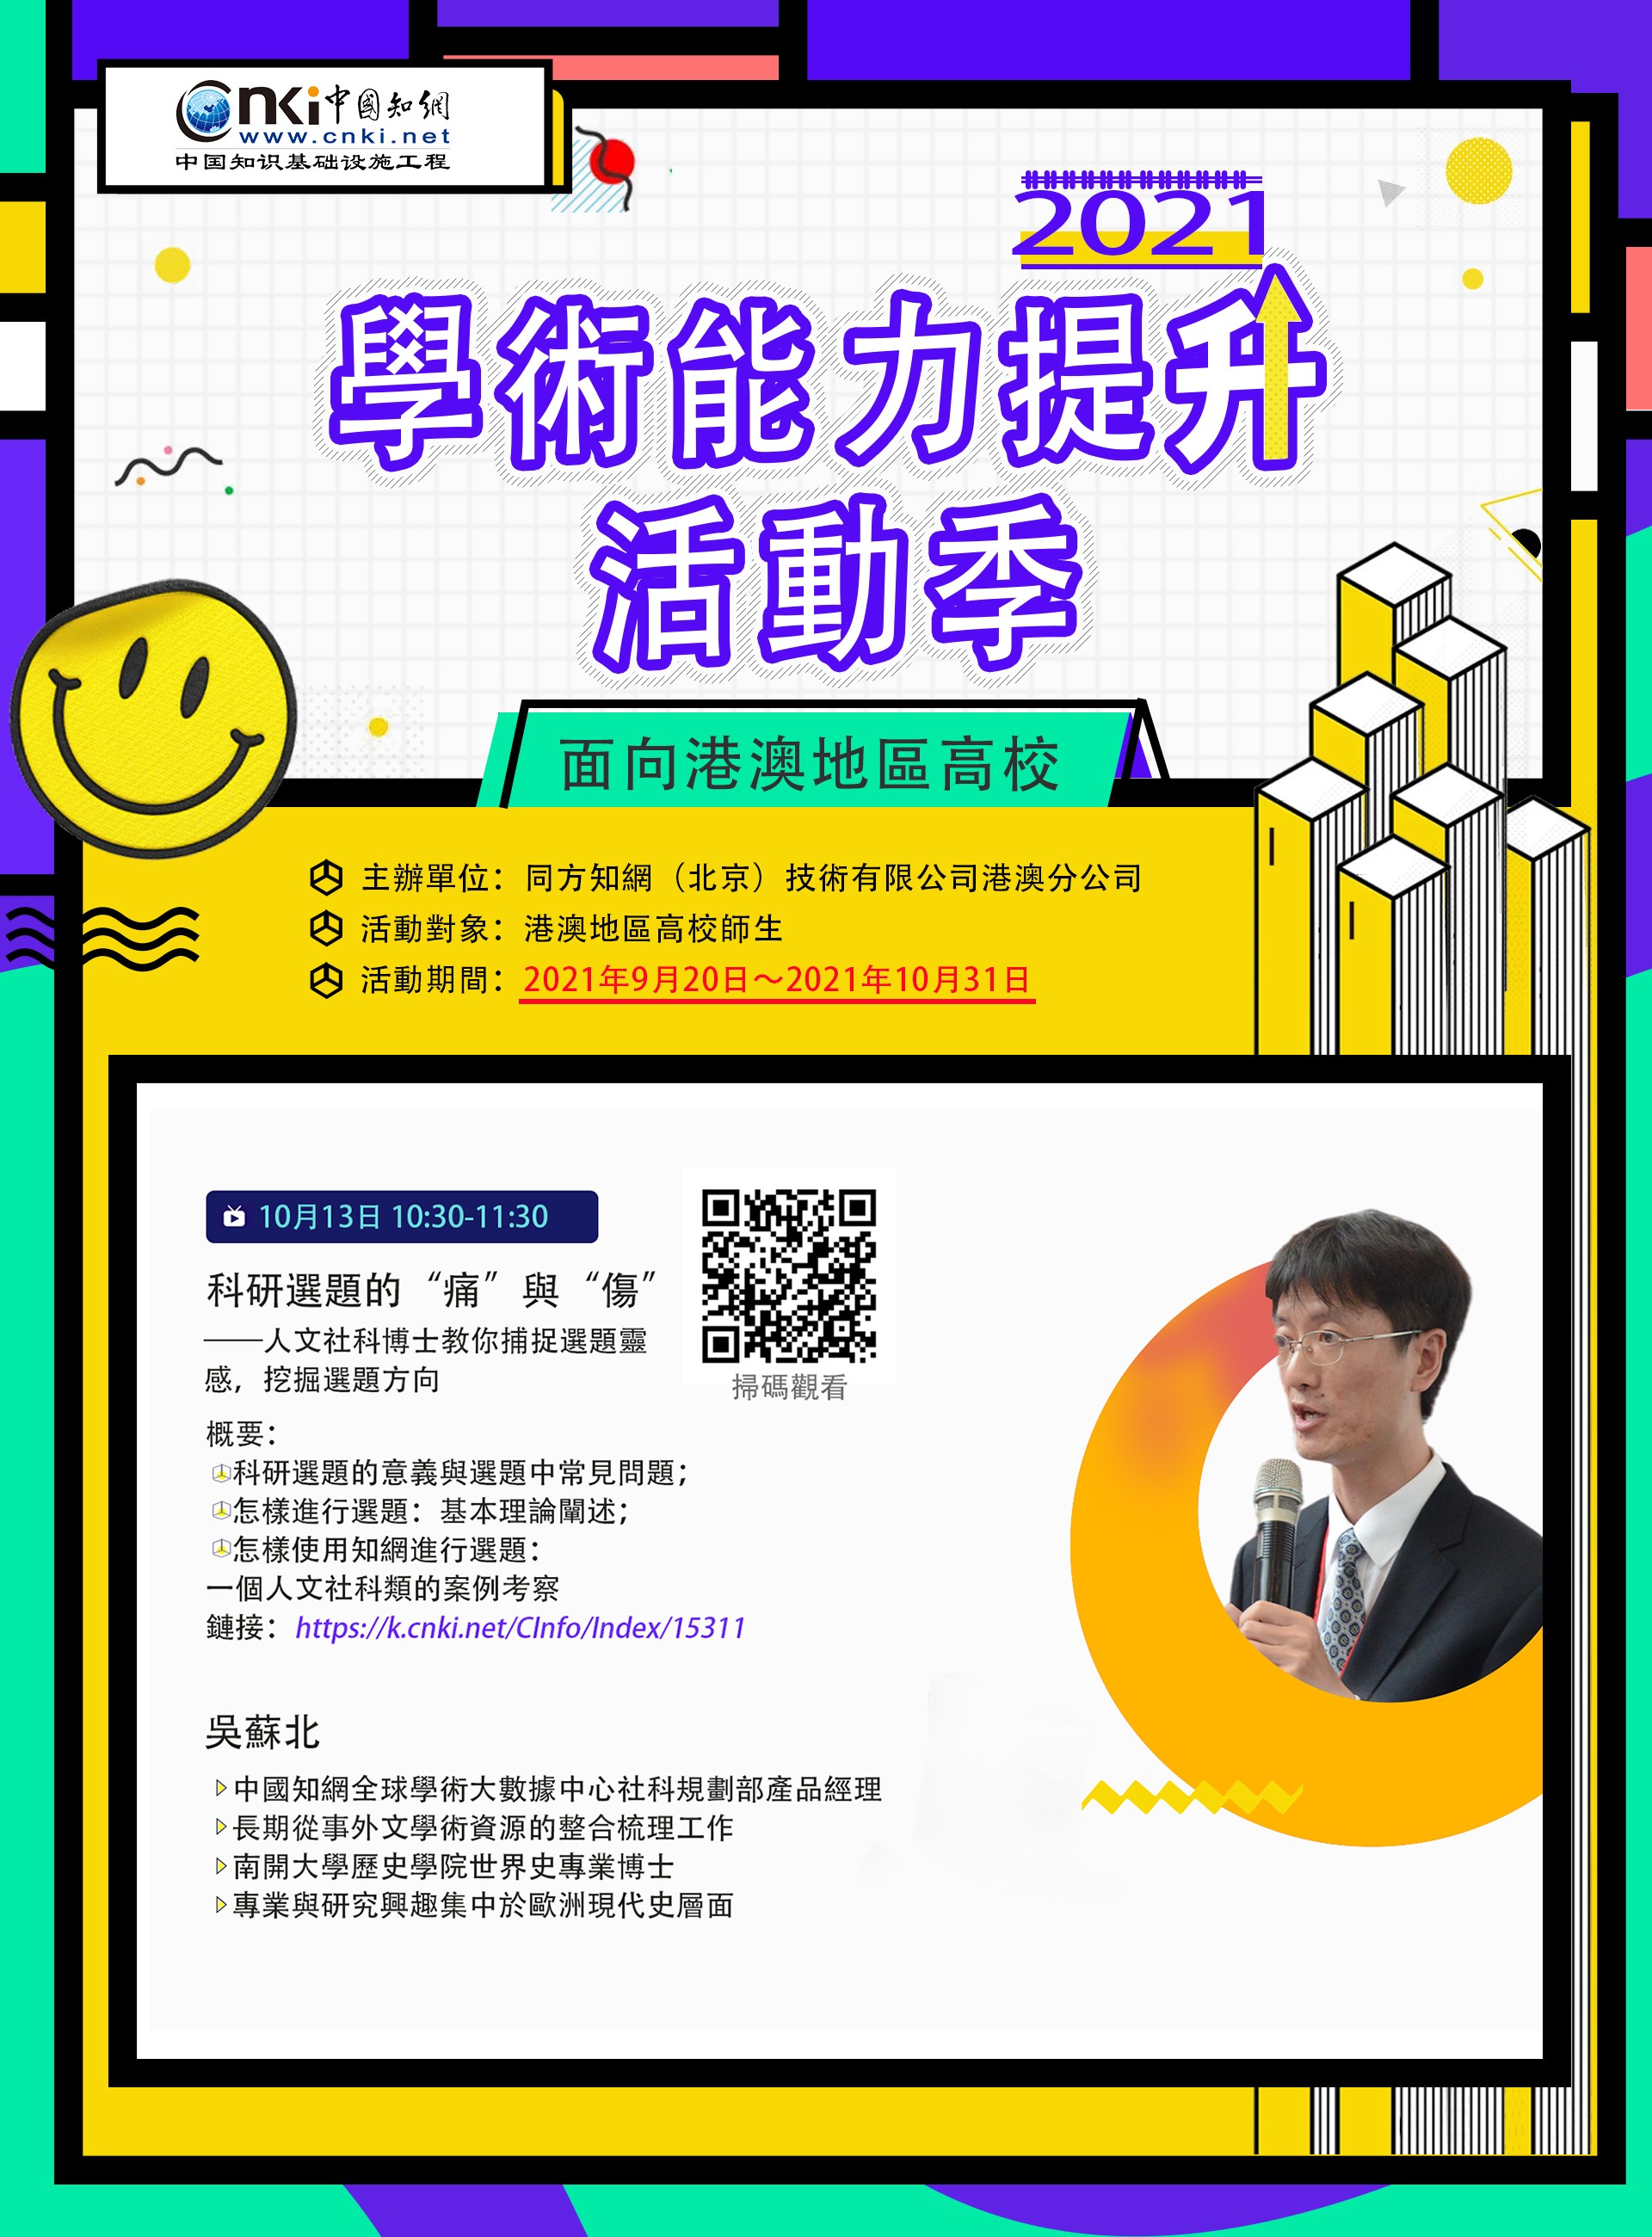 event-webinar-cnki-hkmo-20211013